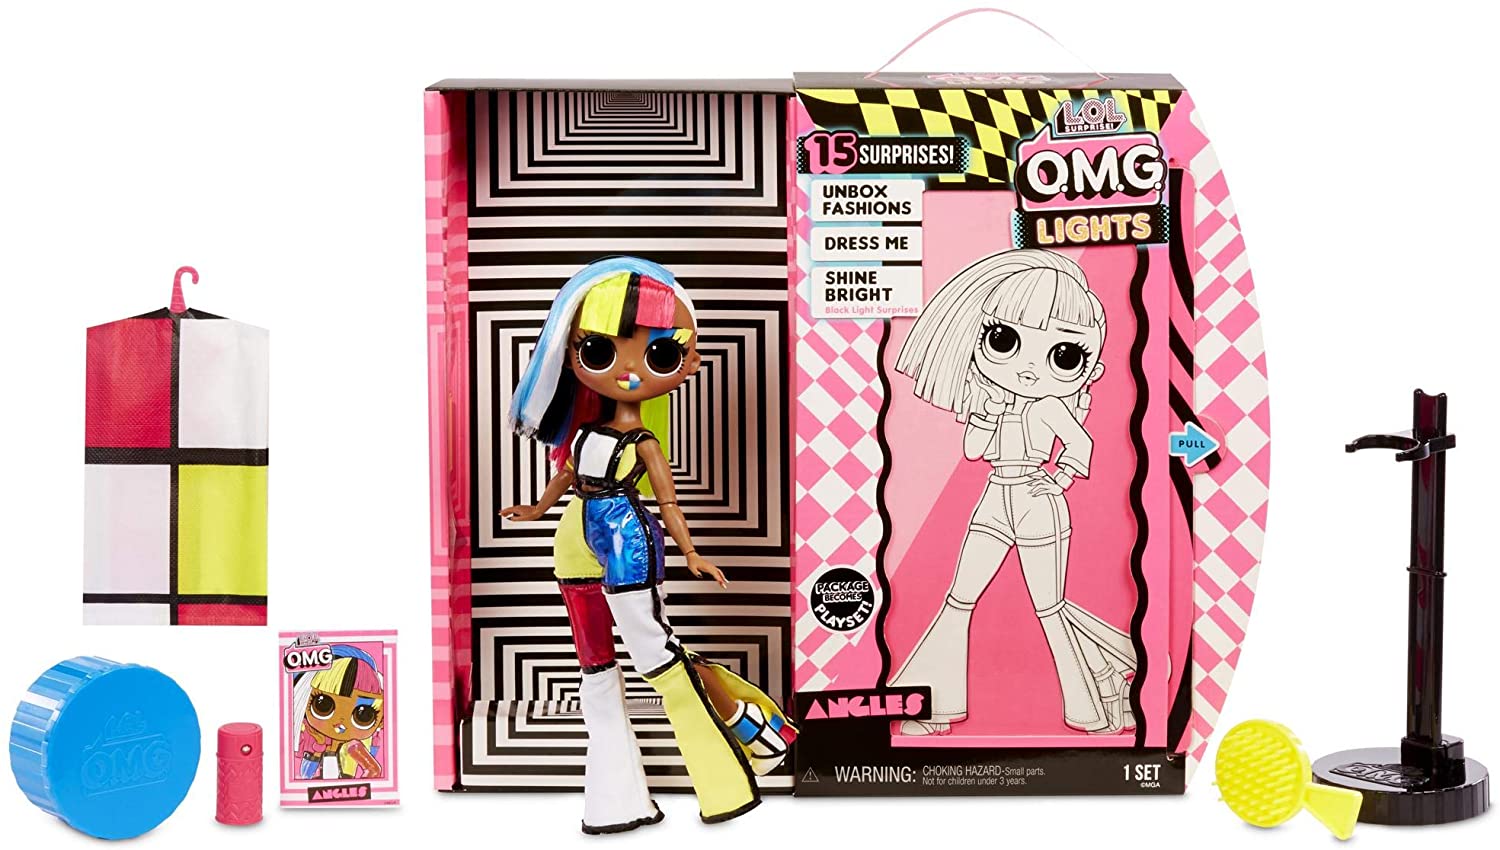 LOL Surprise! O.M.G. Lights Dazzle Fashion Doll with 15 Surprises - wide 8